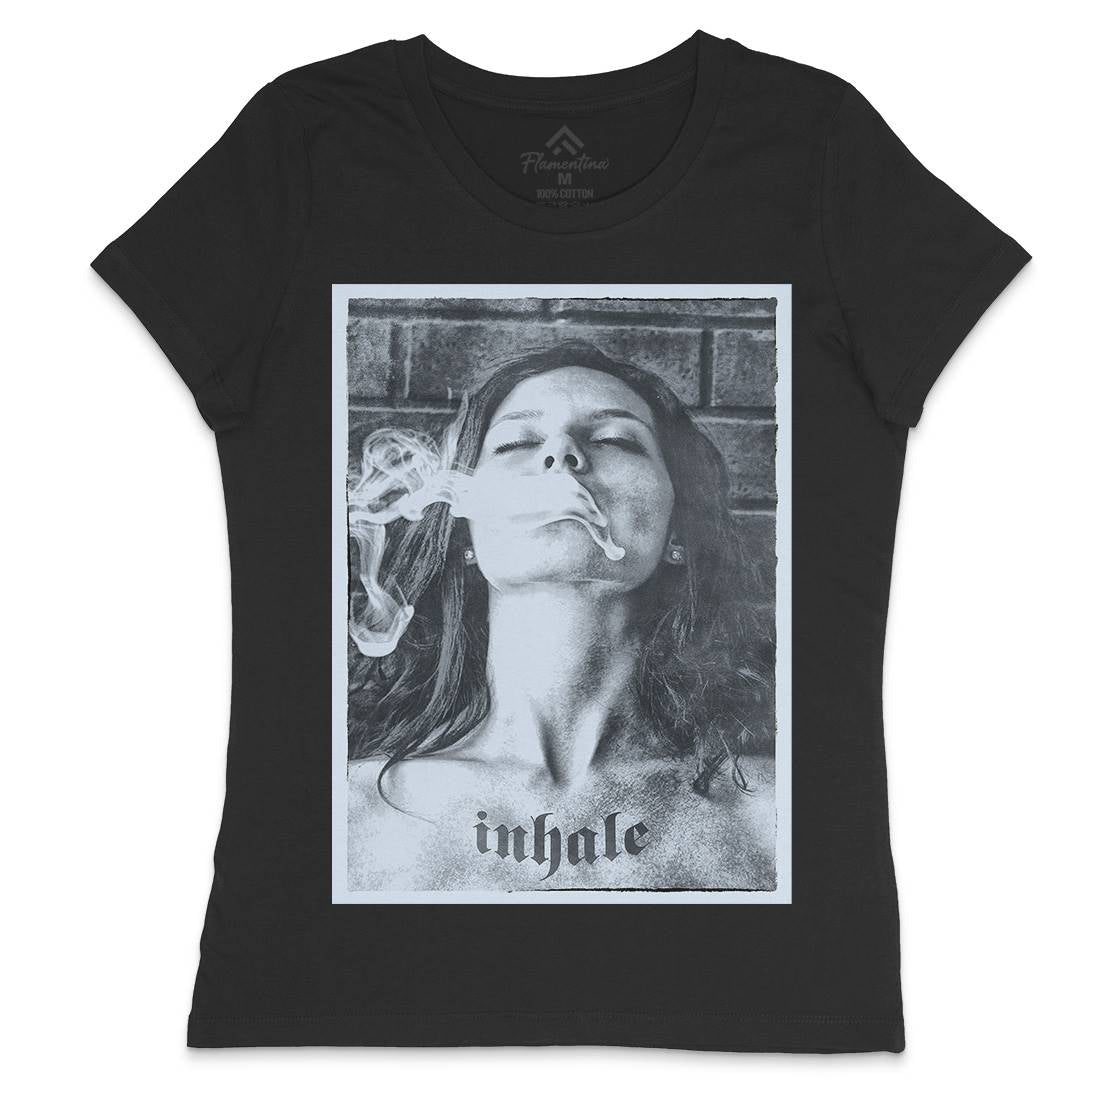 Inhale Womens Crew Neck T-Shirt Drugs A851